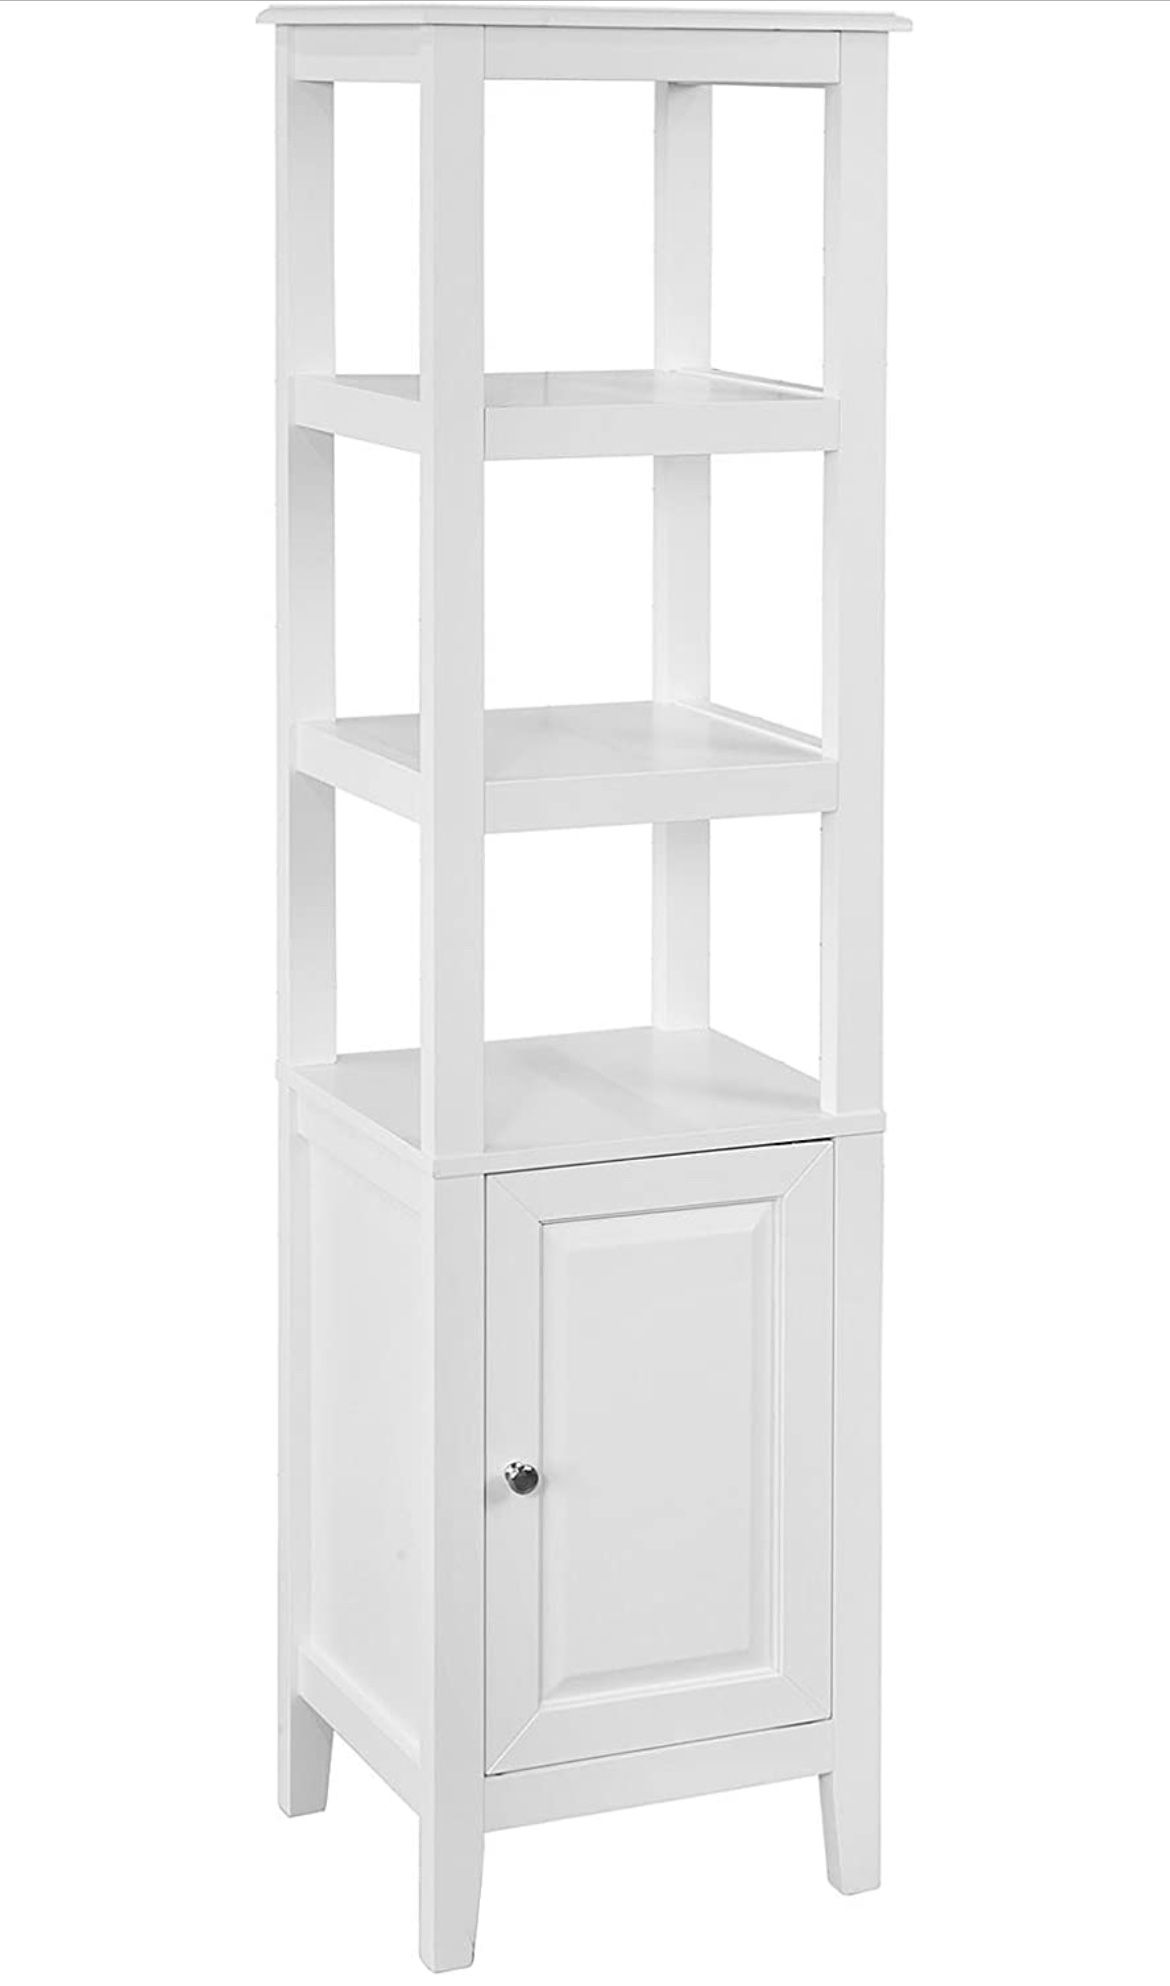 Haotian White Floor Standing Tall Bathroom Storage Cabinet with 3 Shelves and 1Door,Linen Tower Bath Cabinet, Cabinet with Shelf (FRG205-W)